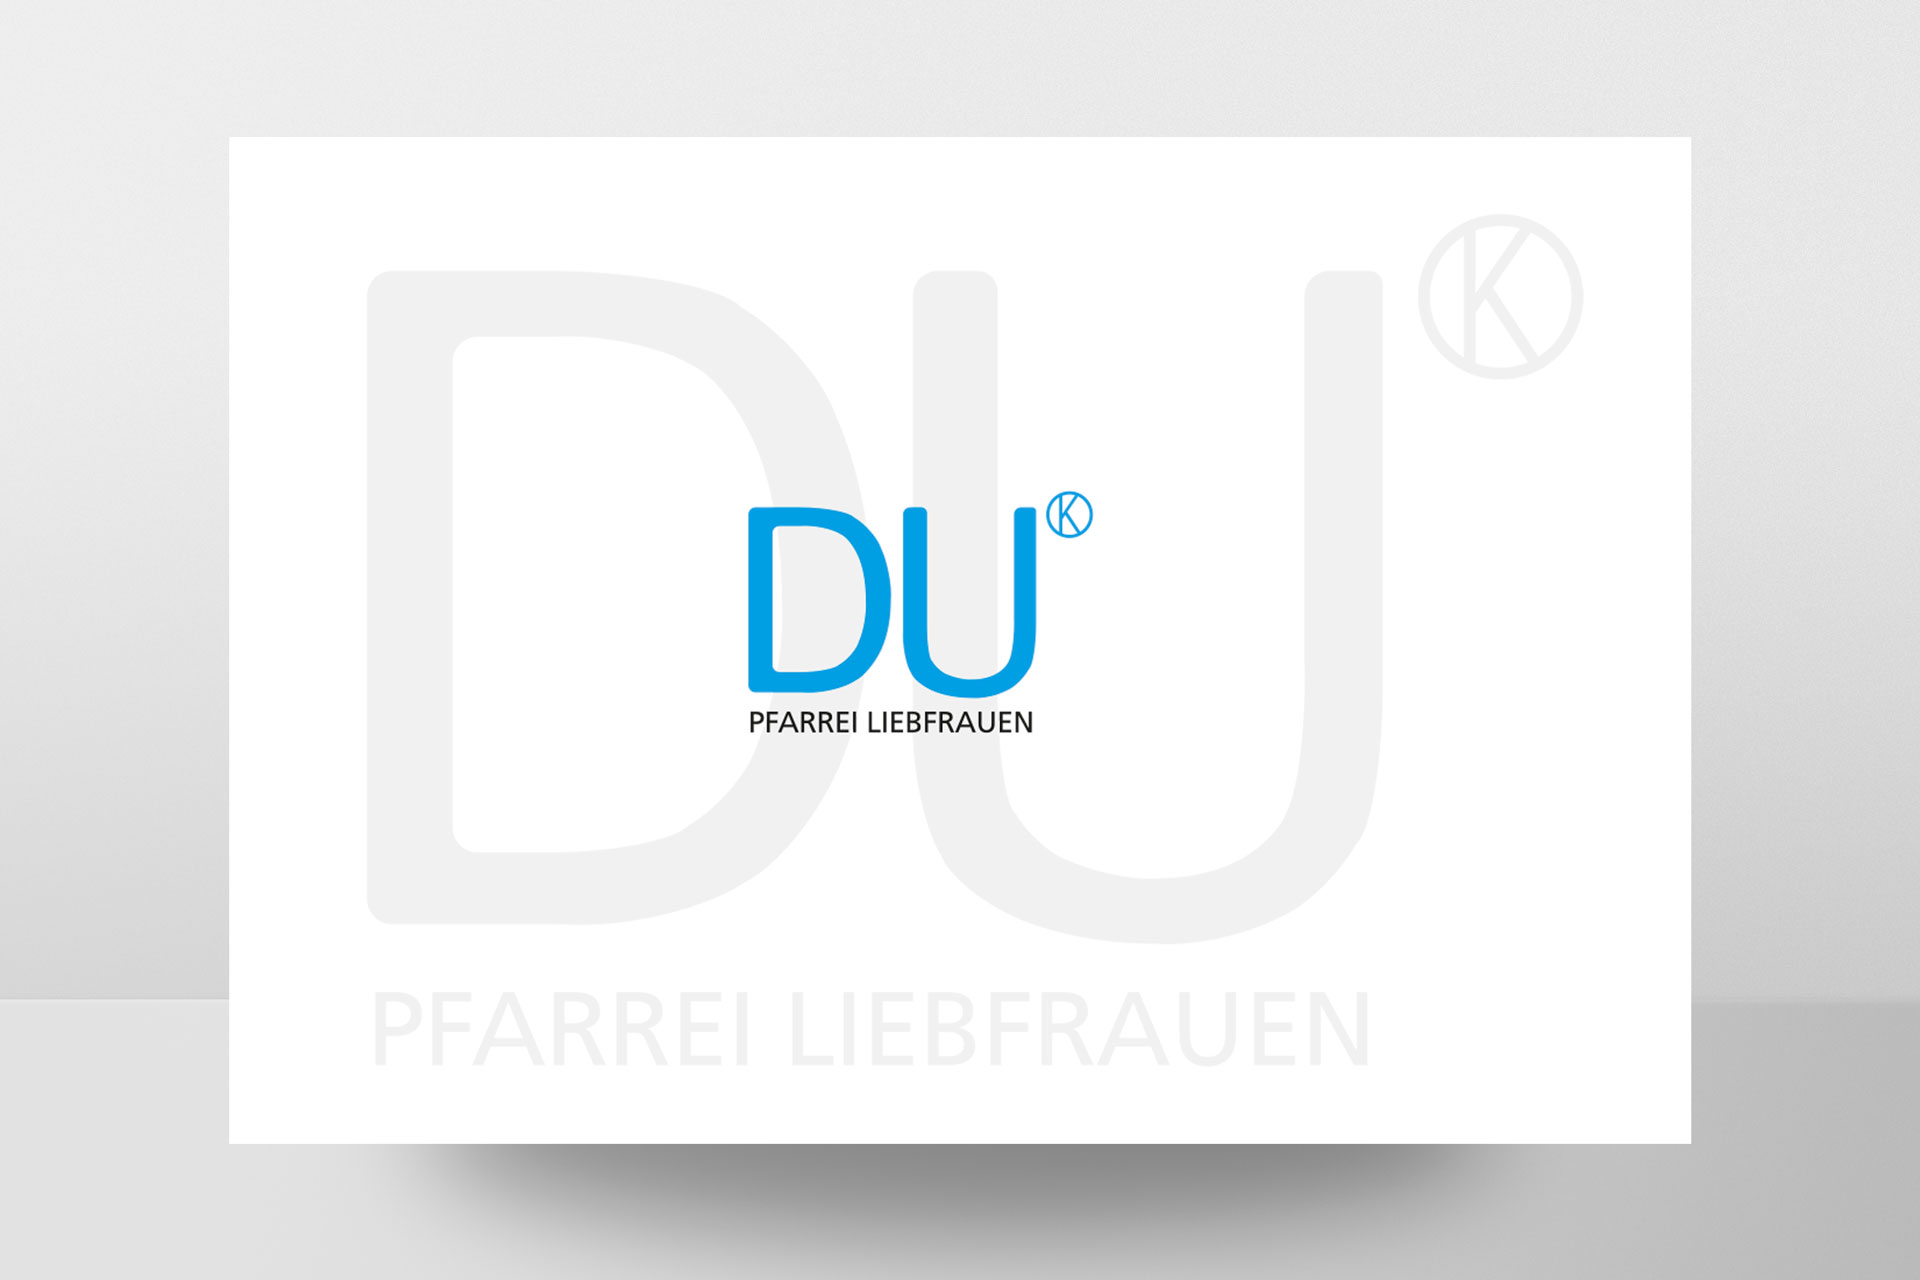 Pfarrei Liebfraueb Corporate Design Mockup